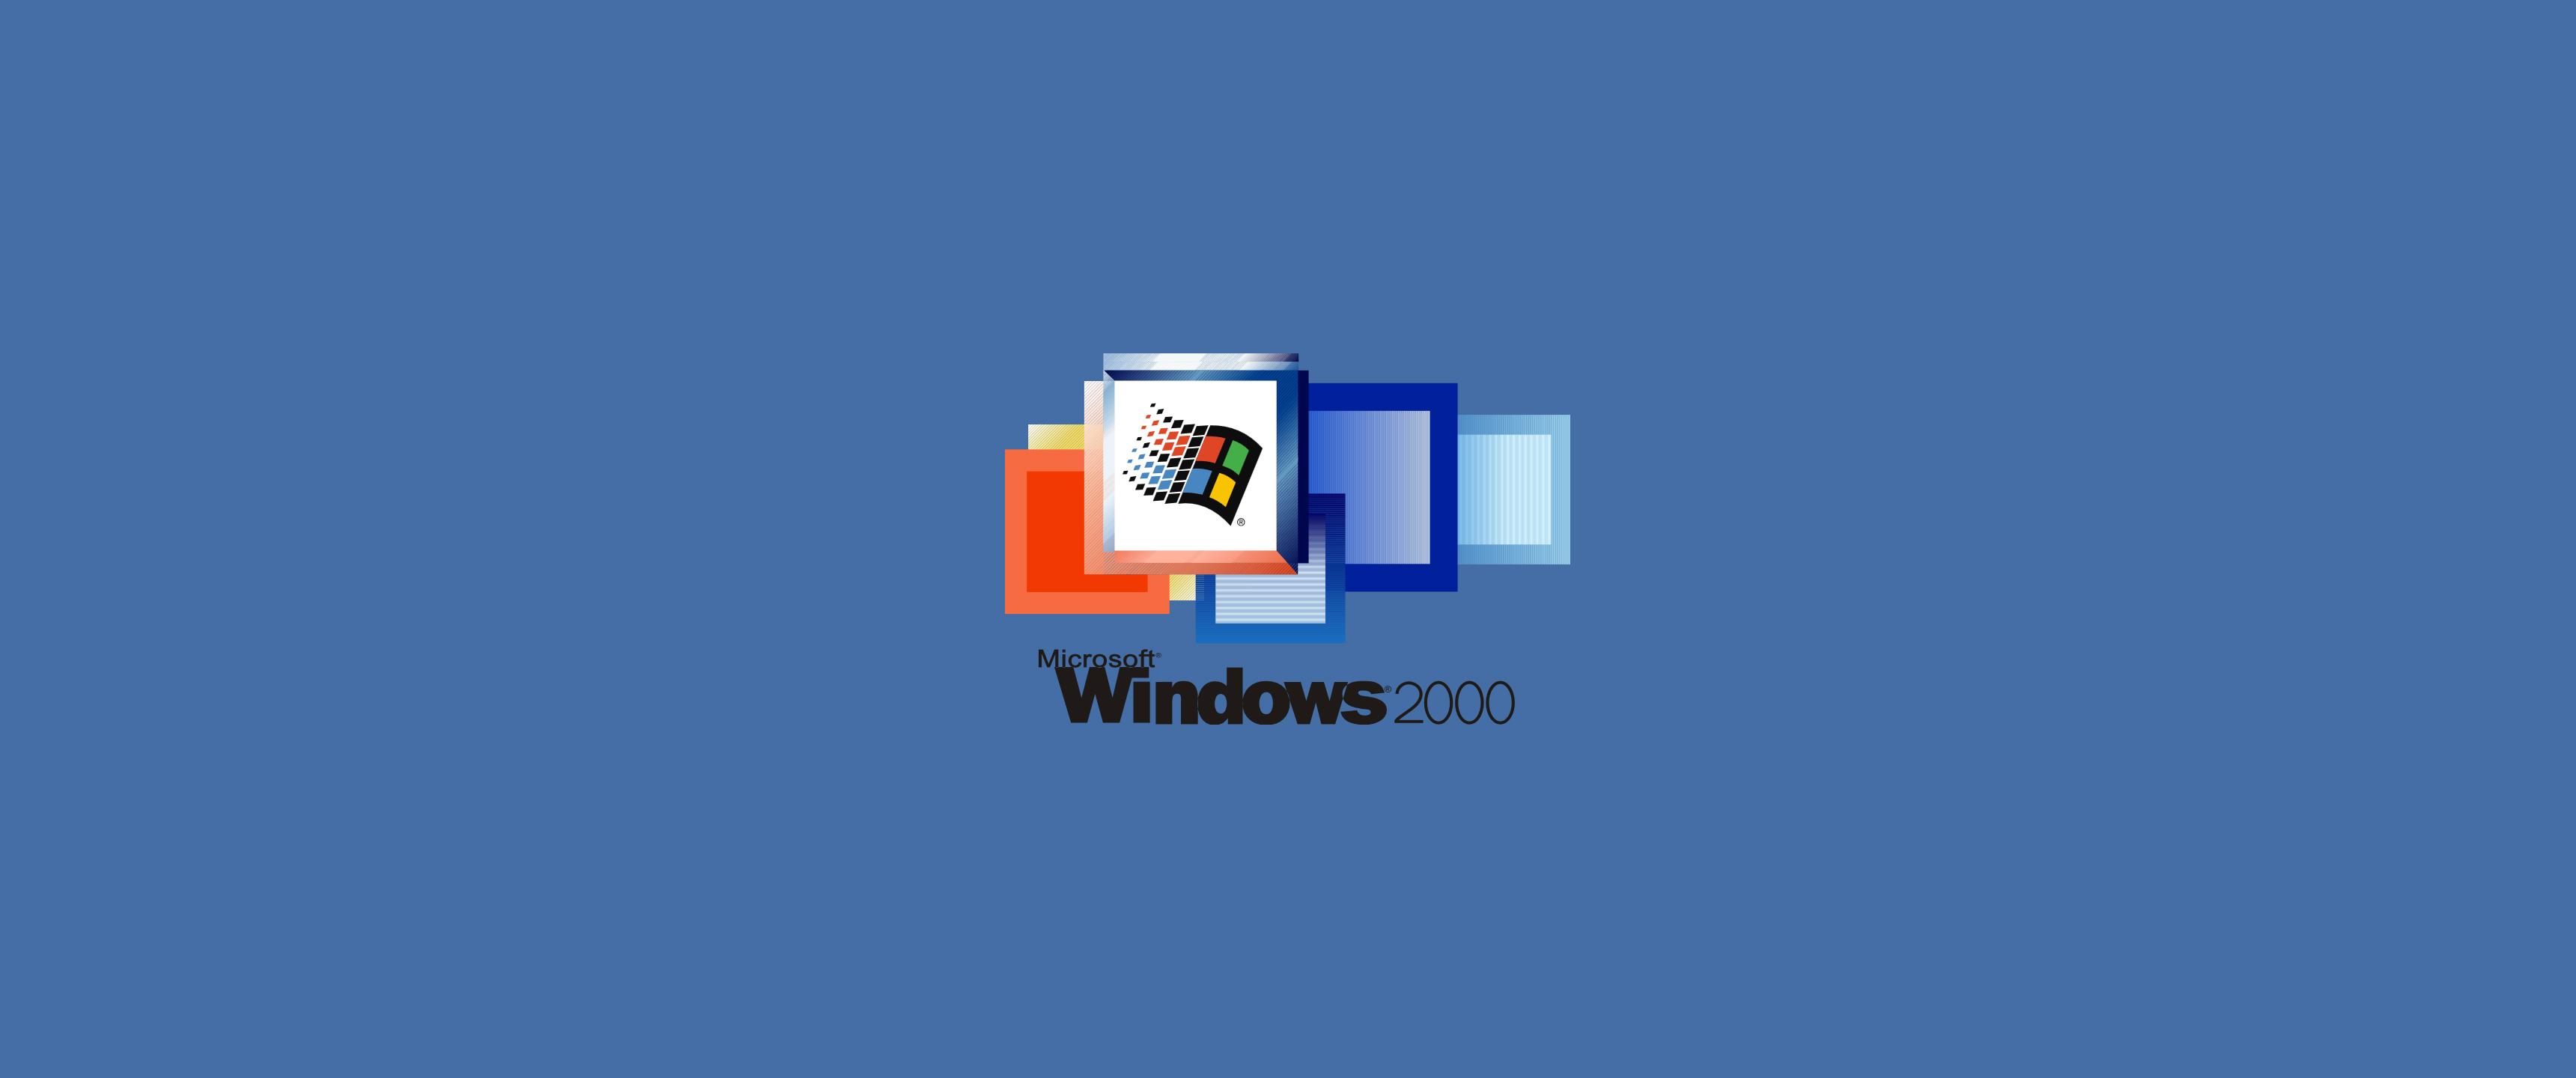 Windows HD Computer, 4k Wallpaper, Image